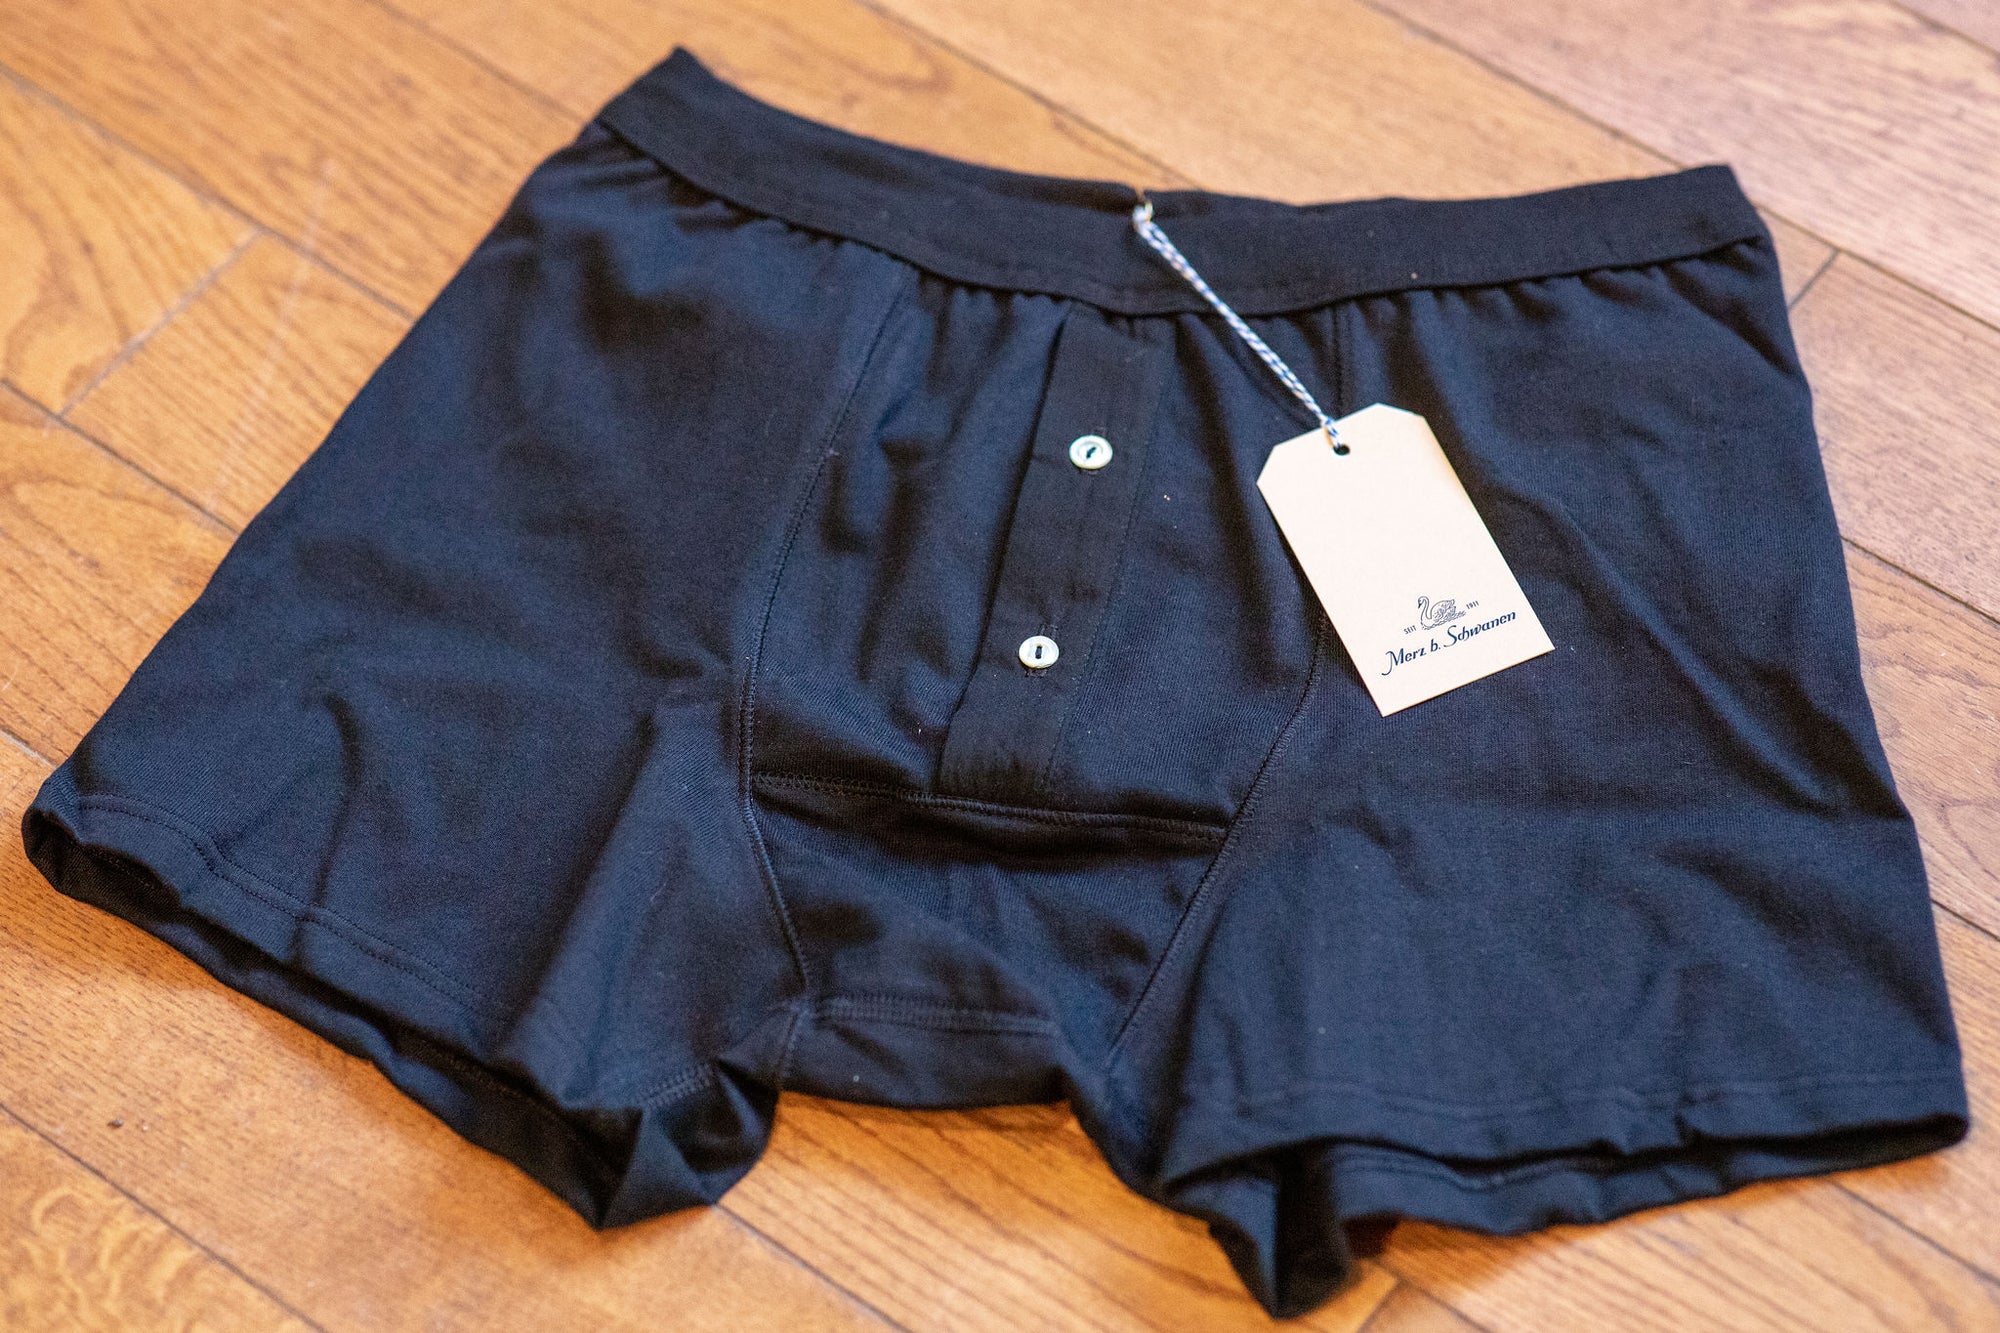 Merz b. Schwanen 255 Button Facing Underpants - Deep Black - Franklin & Poe